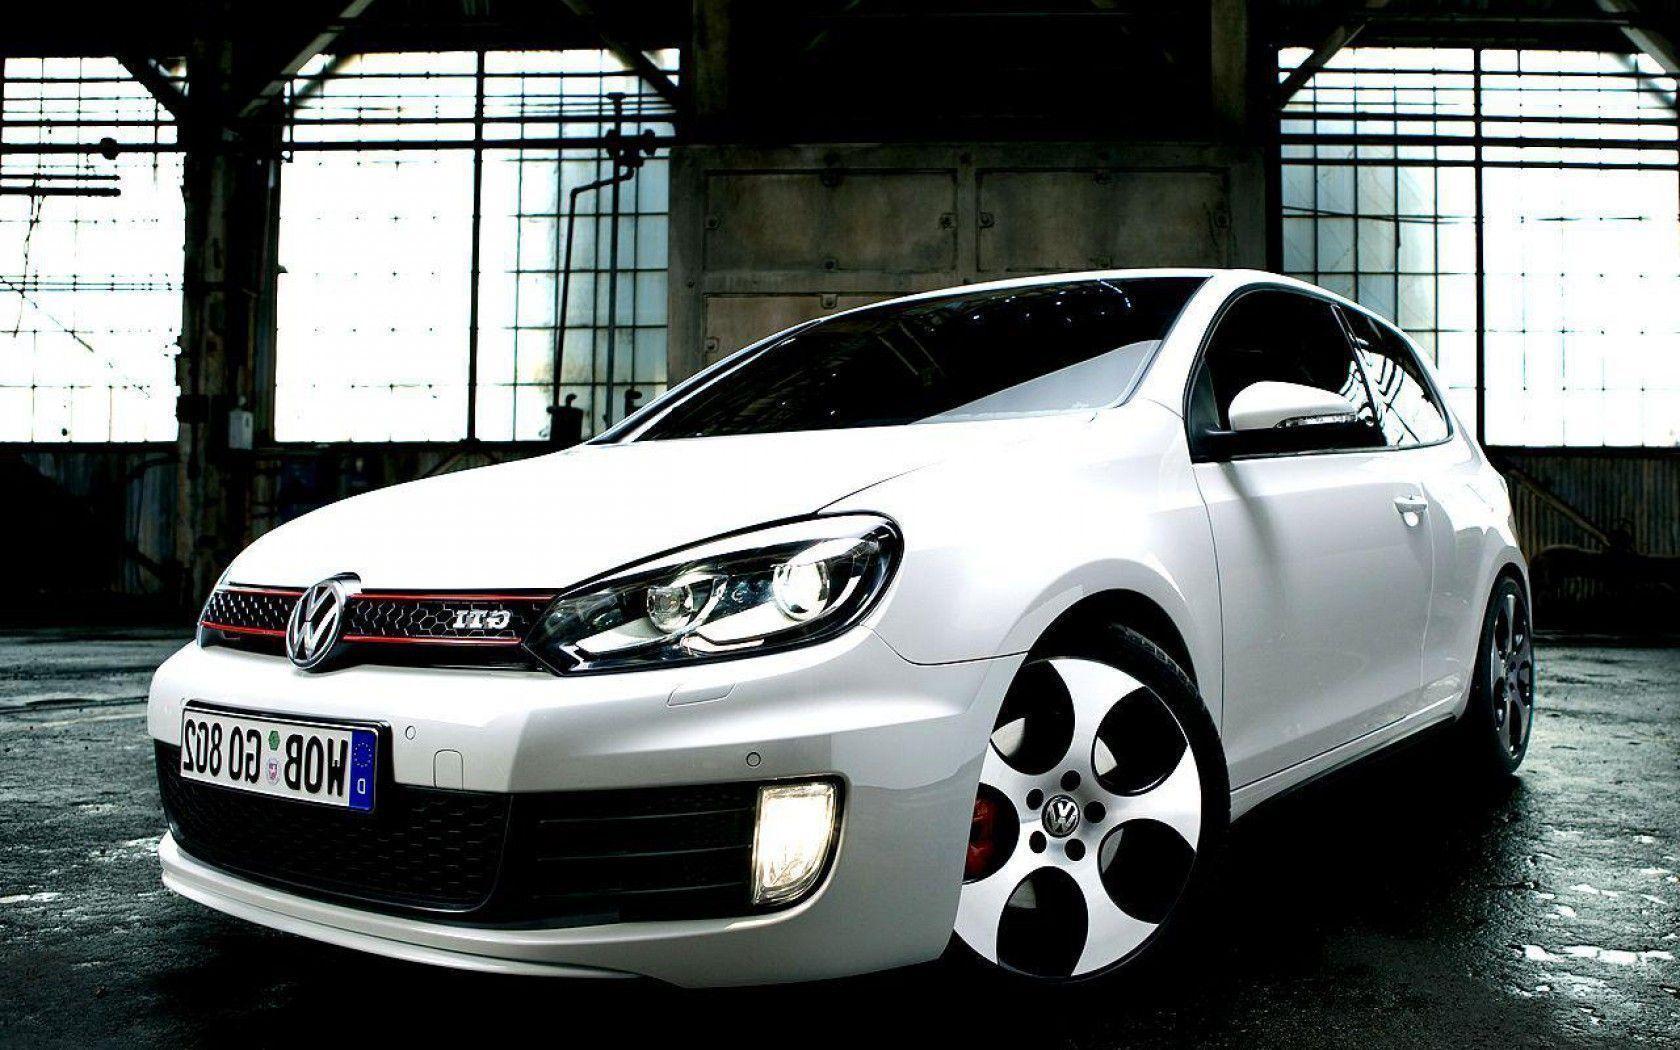 Free Download Wallpaper Cars Full HD Golf Gti Volkswagen W Year